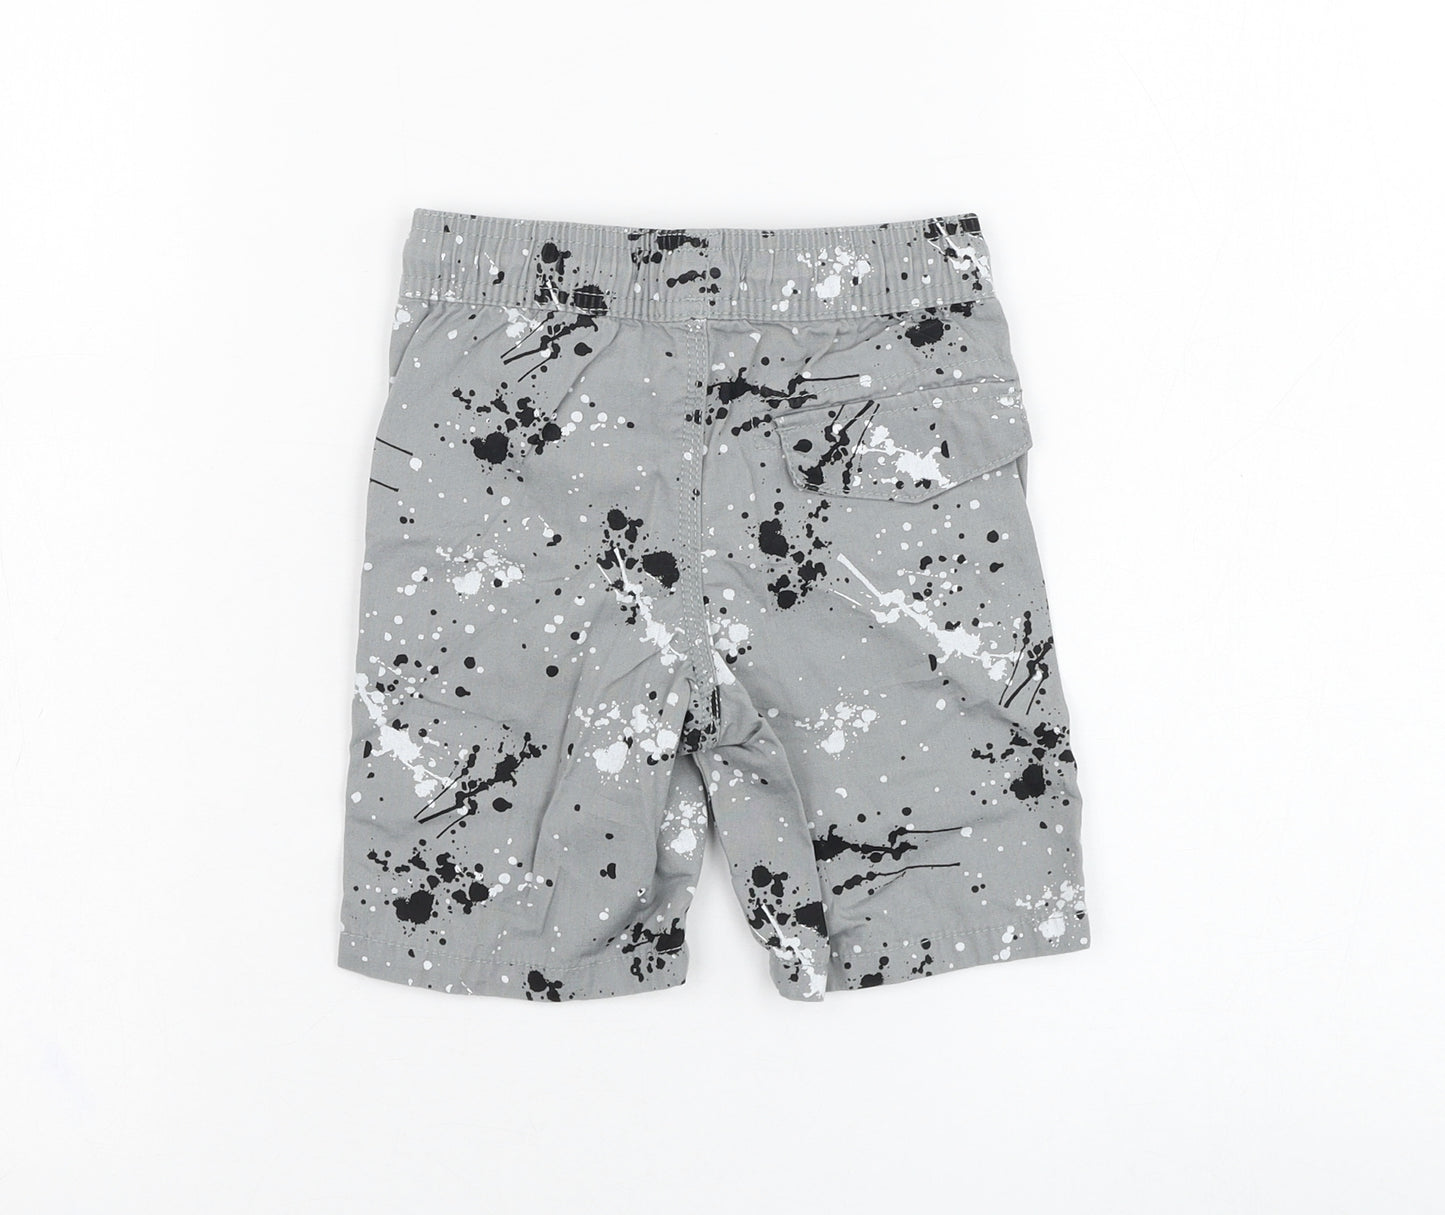 Primark Boys Grey  Cotton Bermuda Shorts Size 2-3 Years  Regular  - Splatter